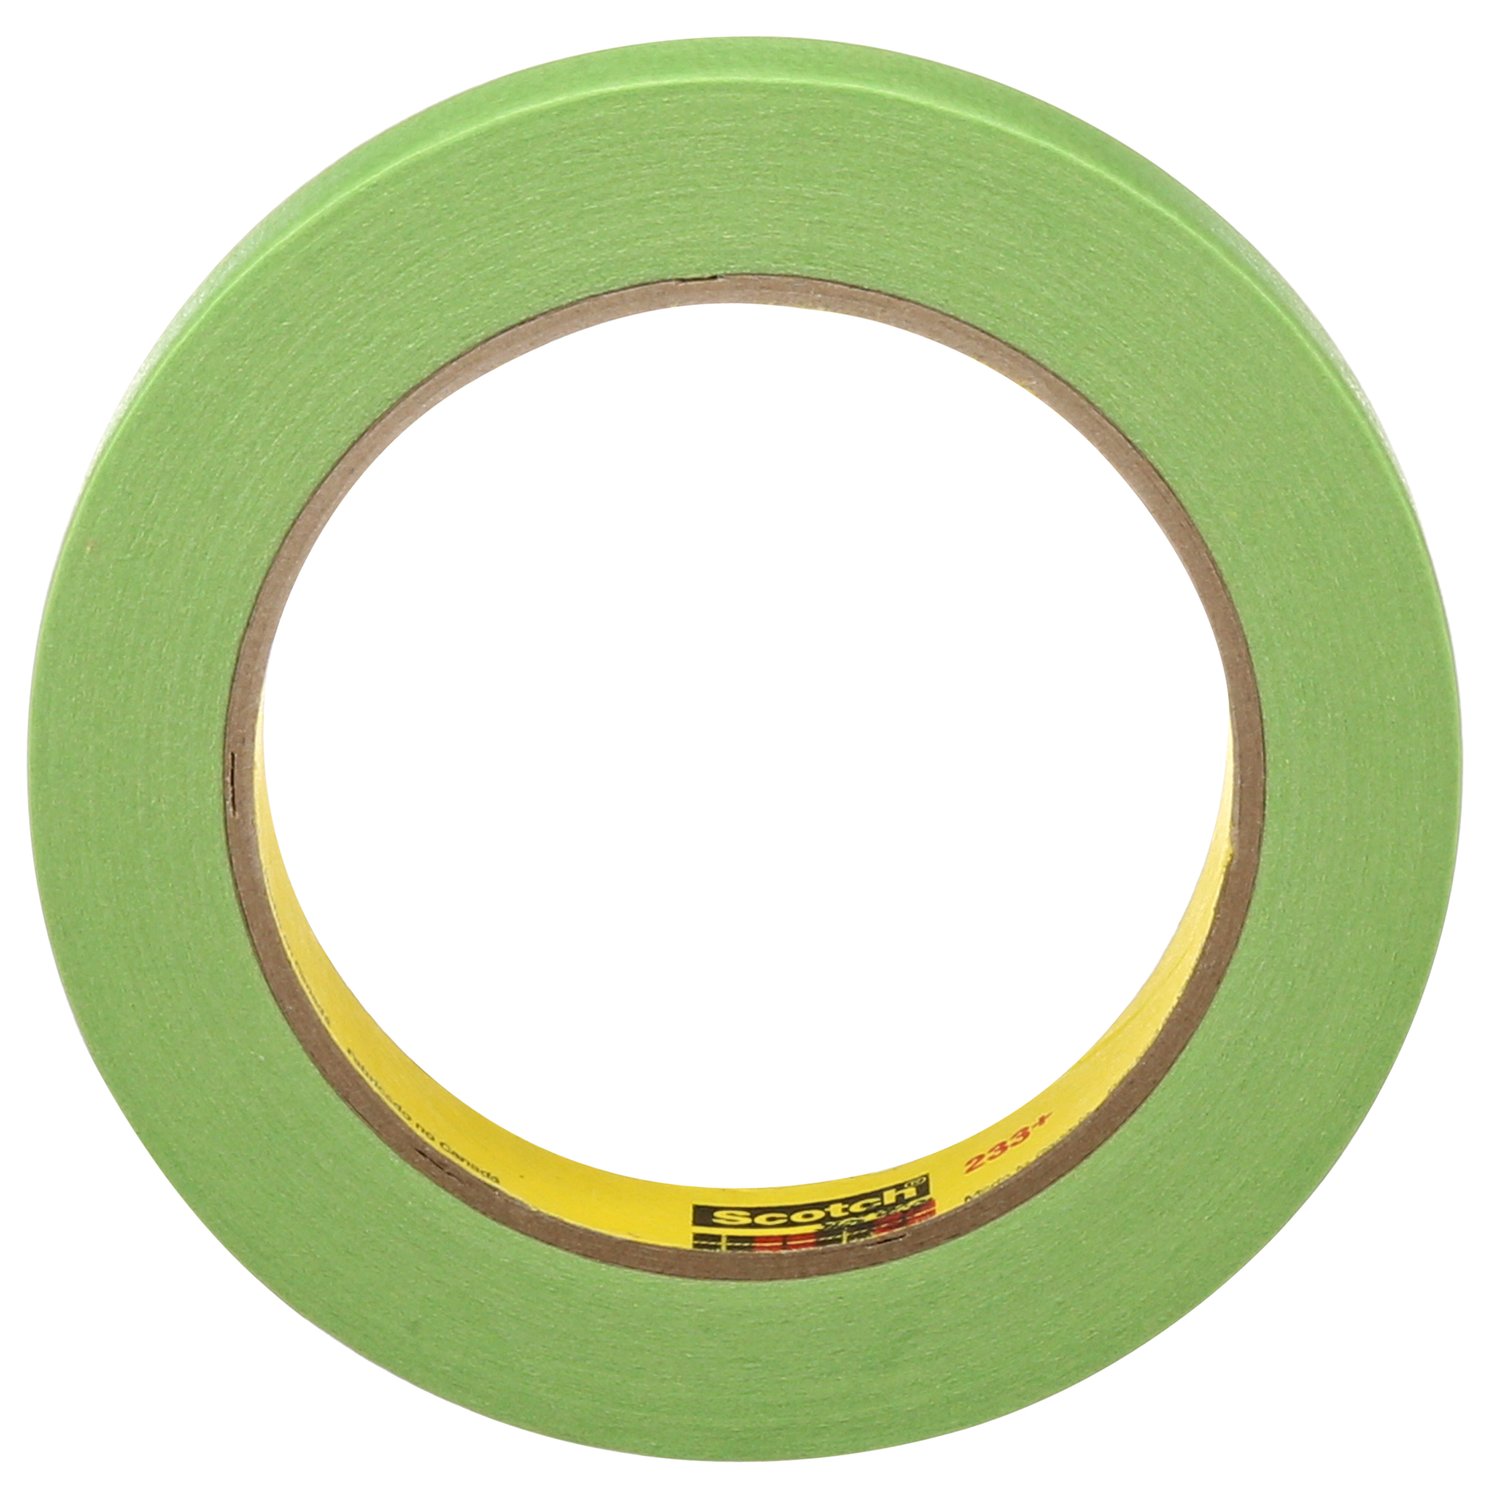 7000048804 - Scotch Performance Masking Tape 233+ 26336, Green, 24 mm x 55 m, 24/Case